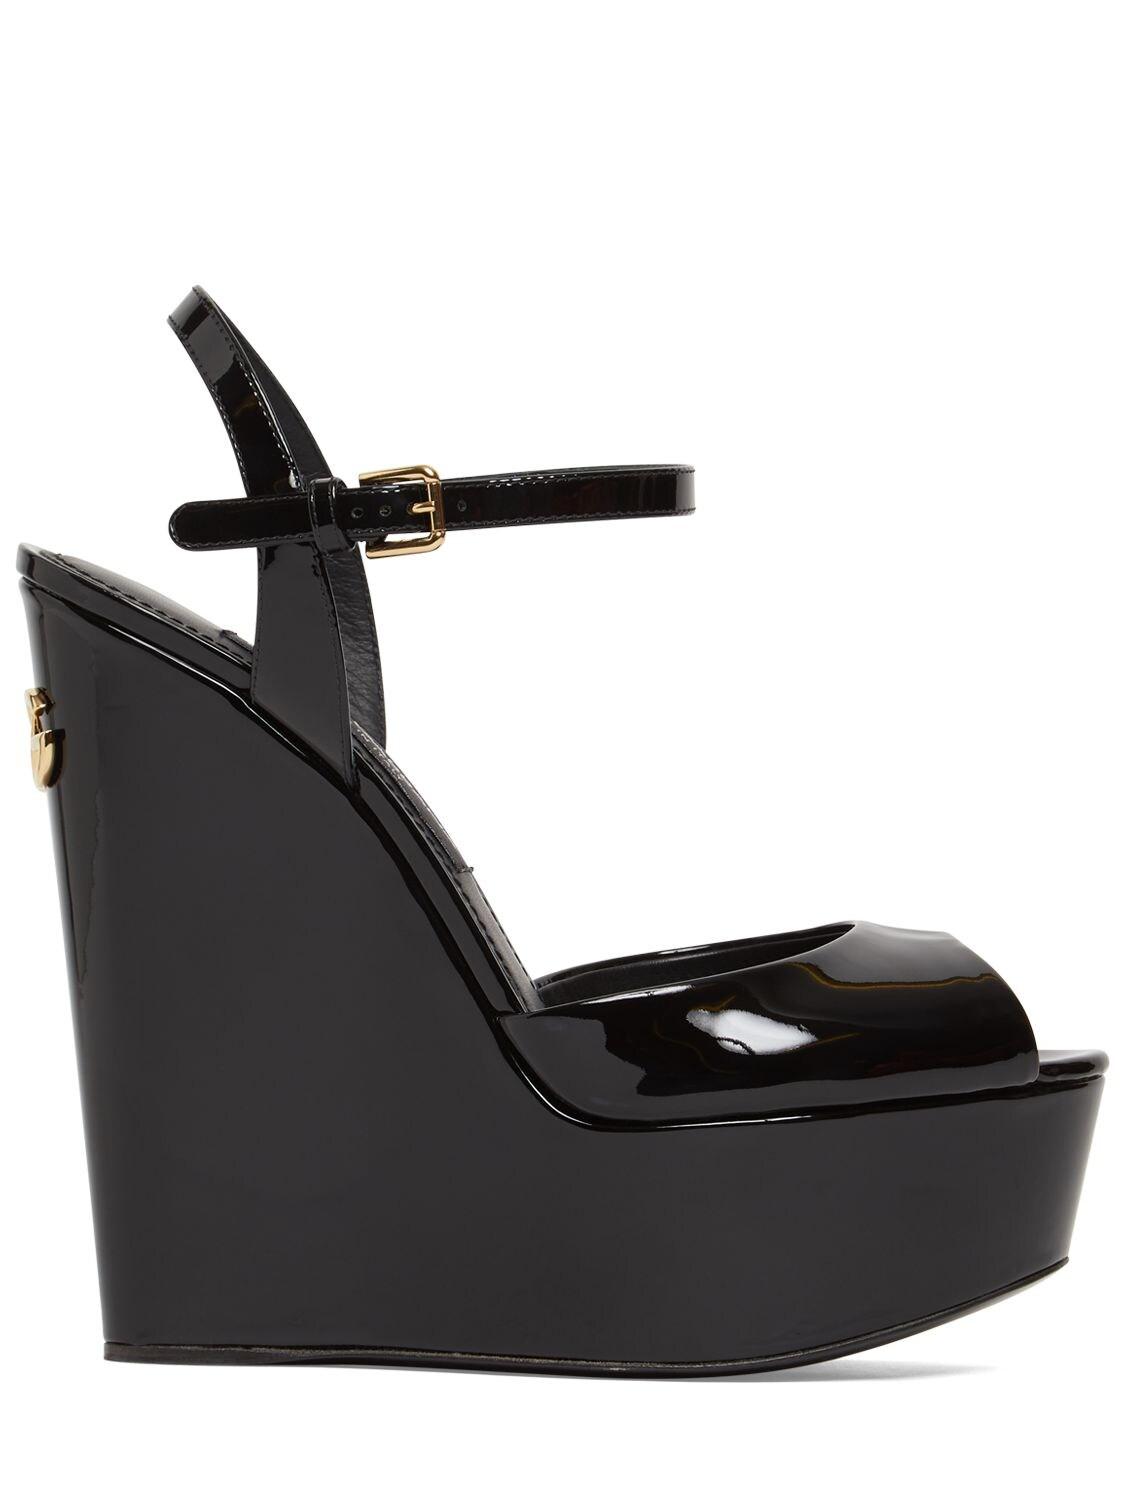 Dolce & Gabbana Logo Patent Platform Wedge Sandal in Black | Lyst UK